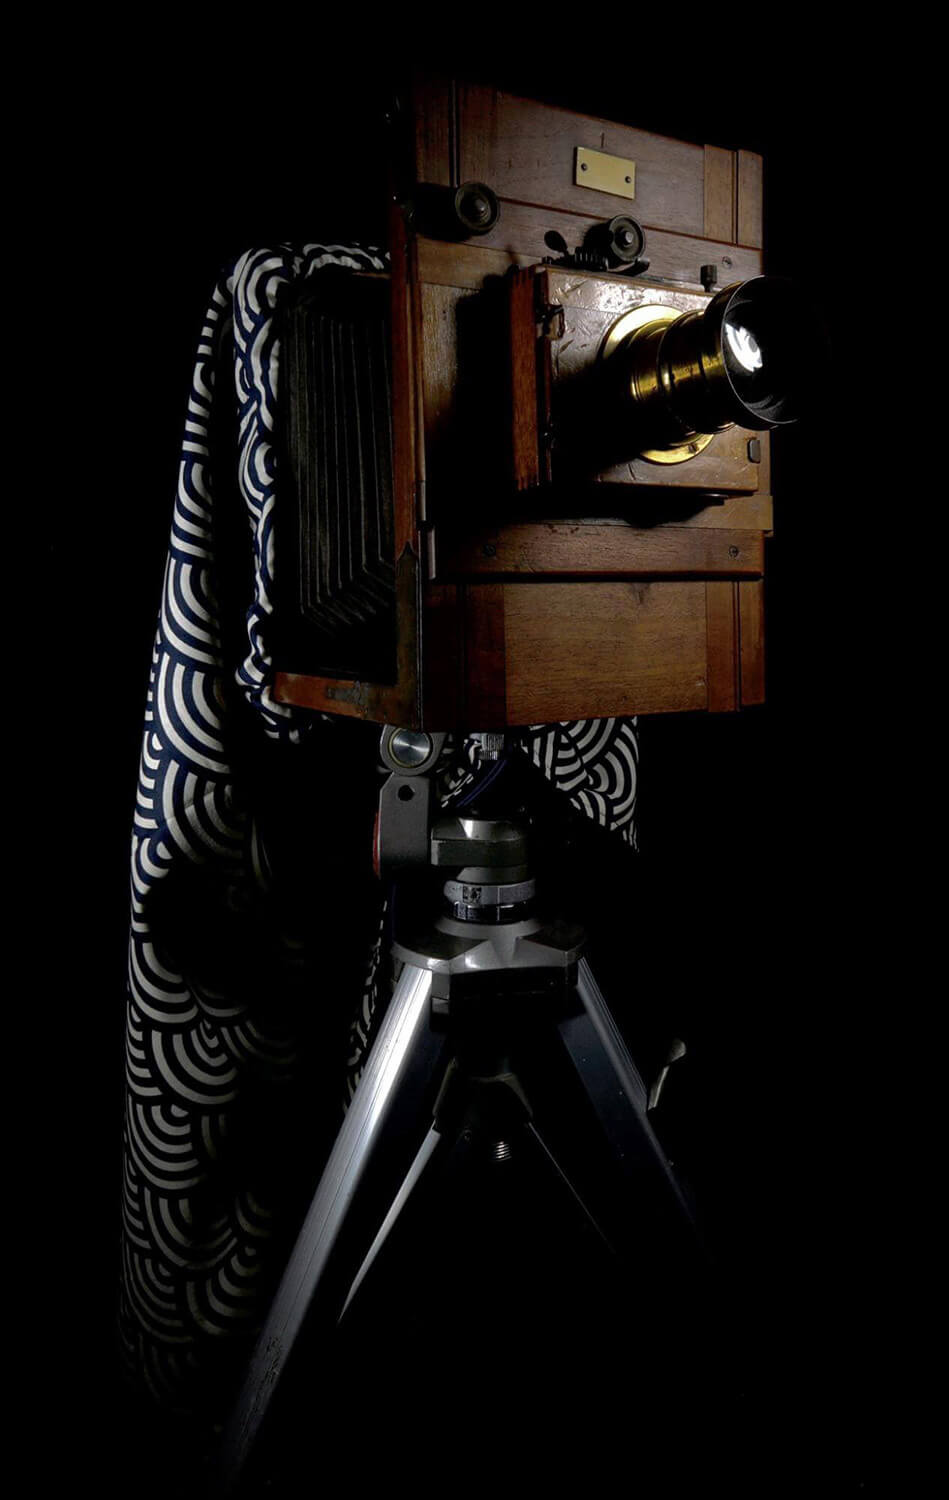 19th Century French 13x18 Tailboard camera, wearing the wonderful custom darkcloth made by Dan K (@ZDP189)